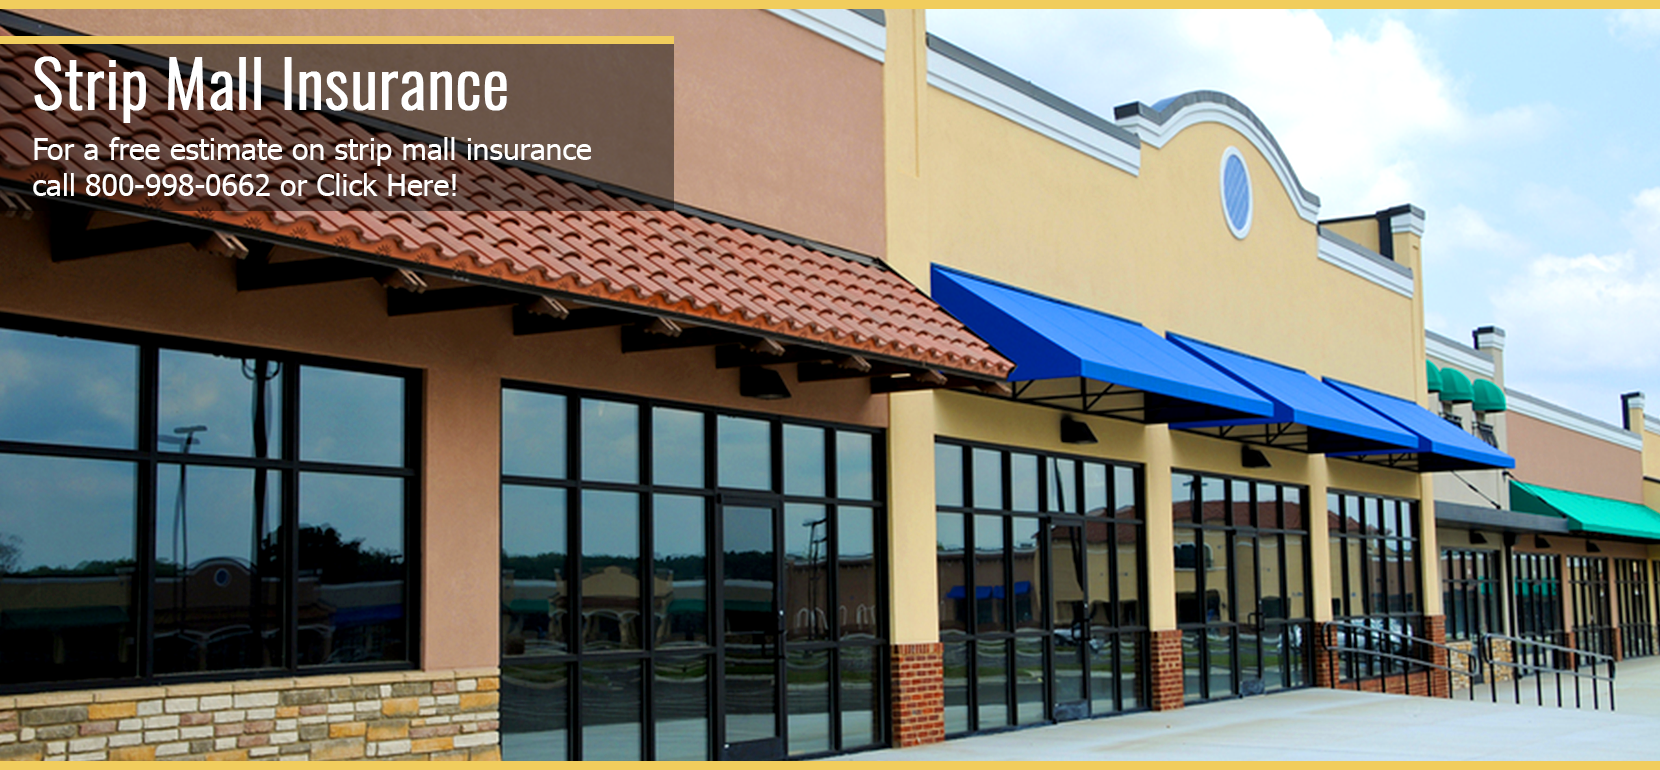 Strip Mall Insurance